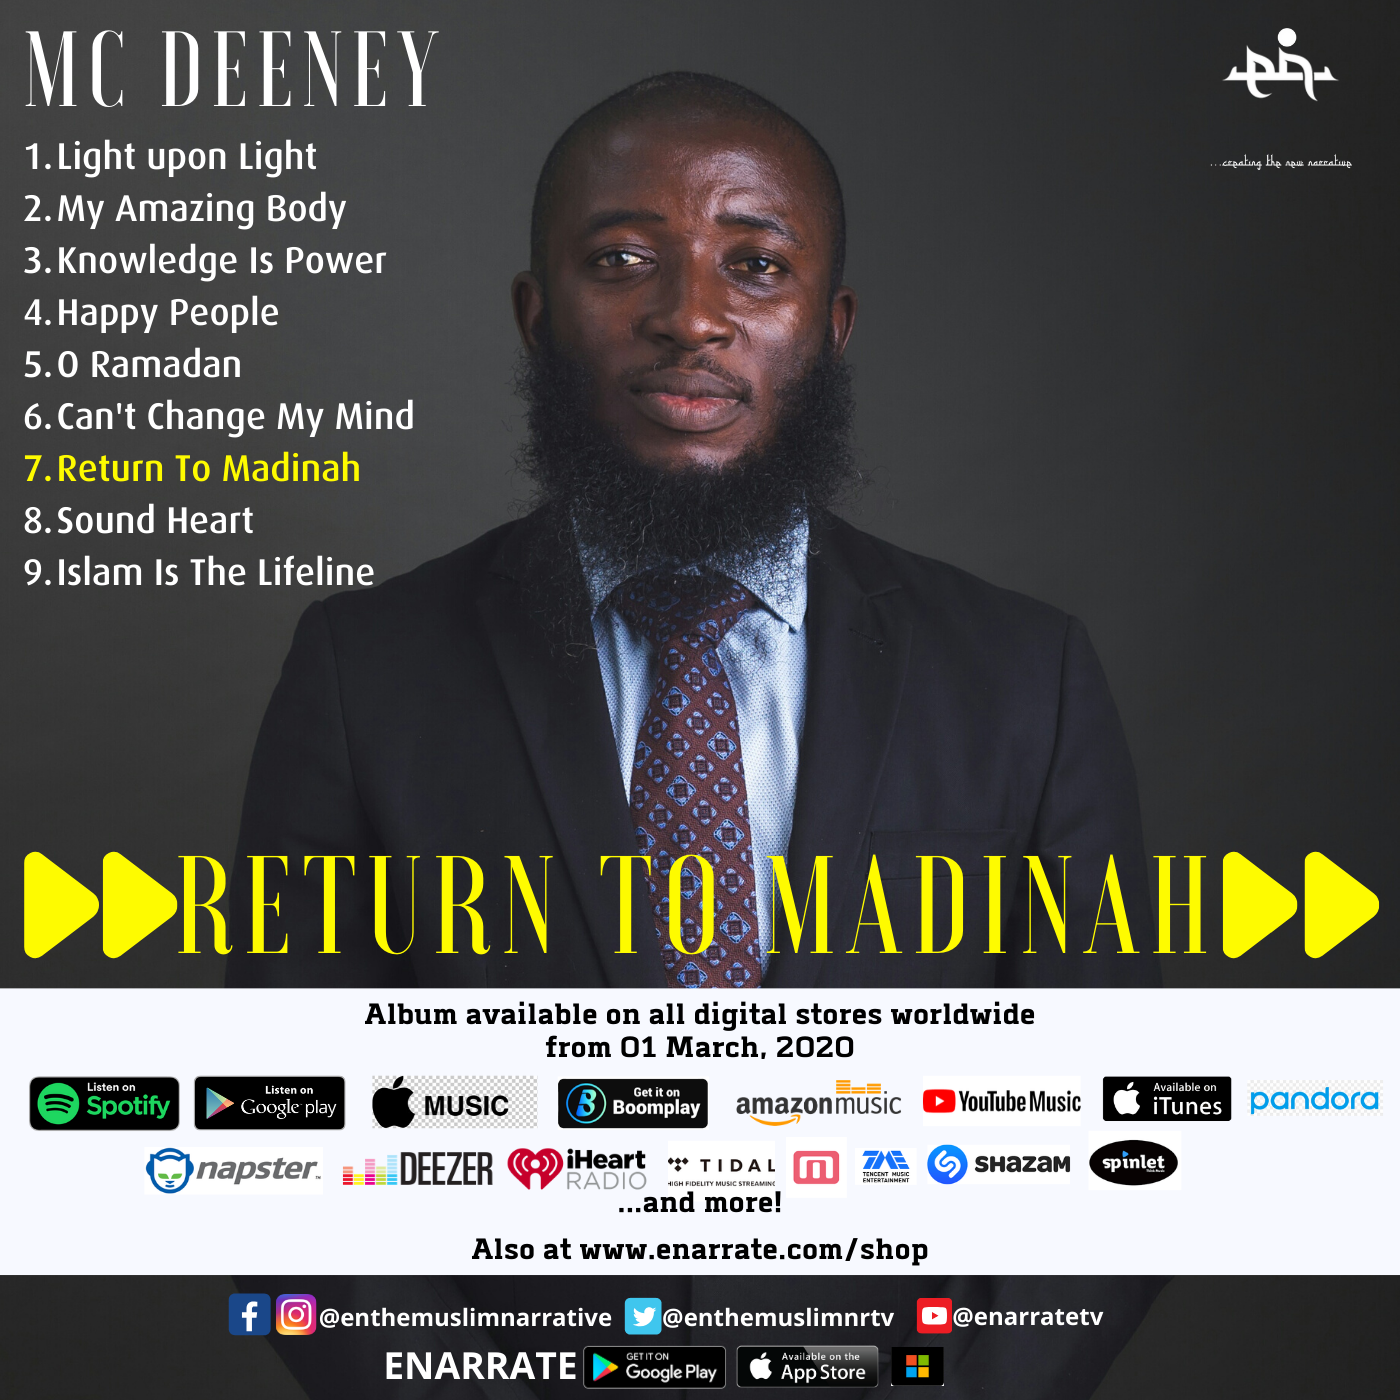 Return To Madinah MC Deeney Campaign